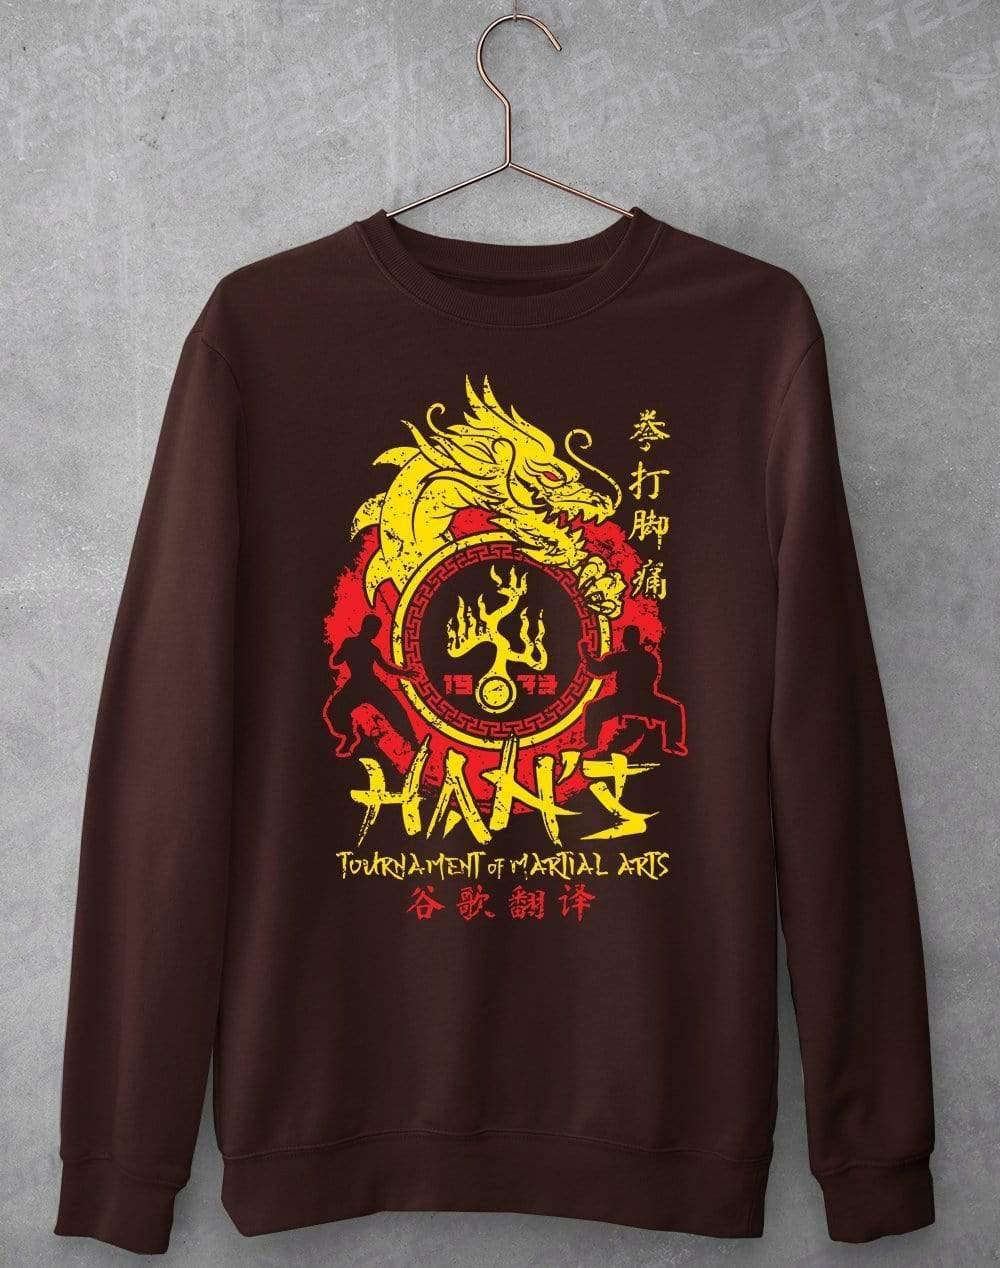 Han's Tournament of Martial Arts Sweatshirt XS / Hot Chocolate  - Off World Tees